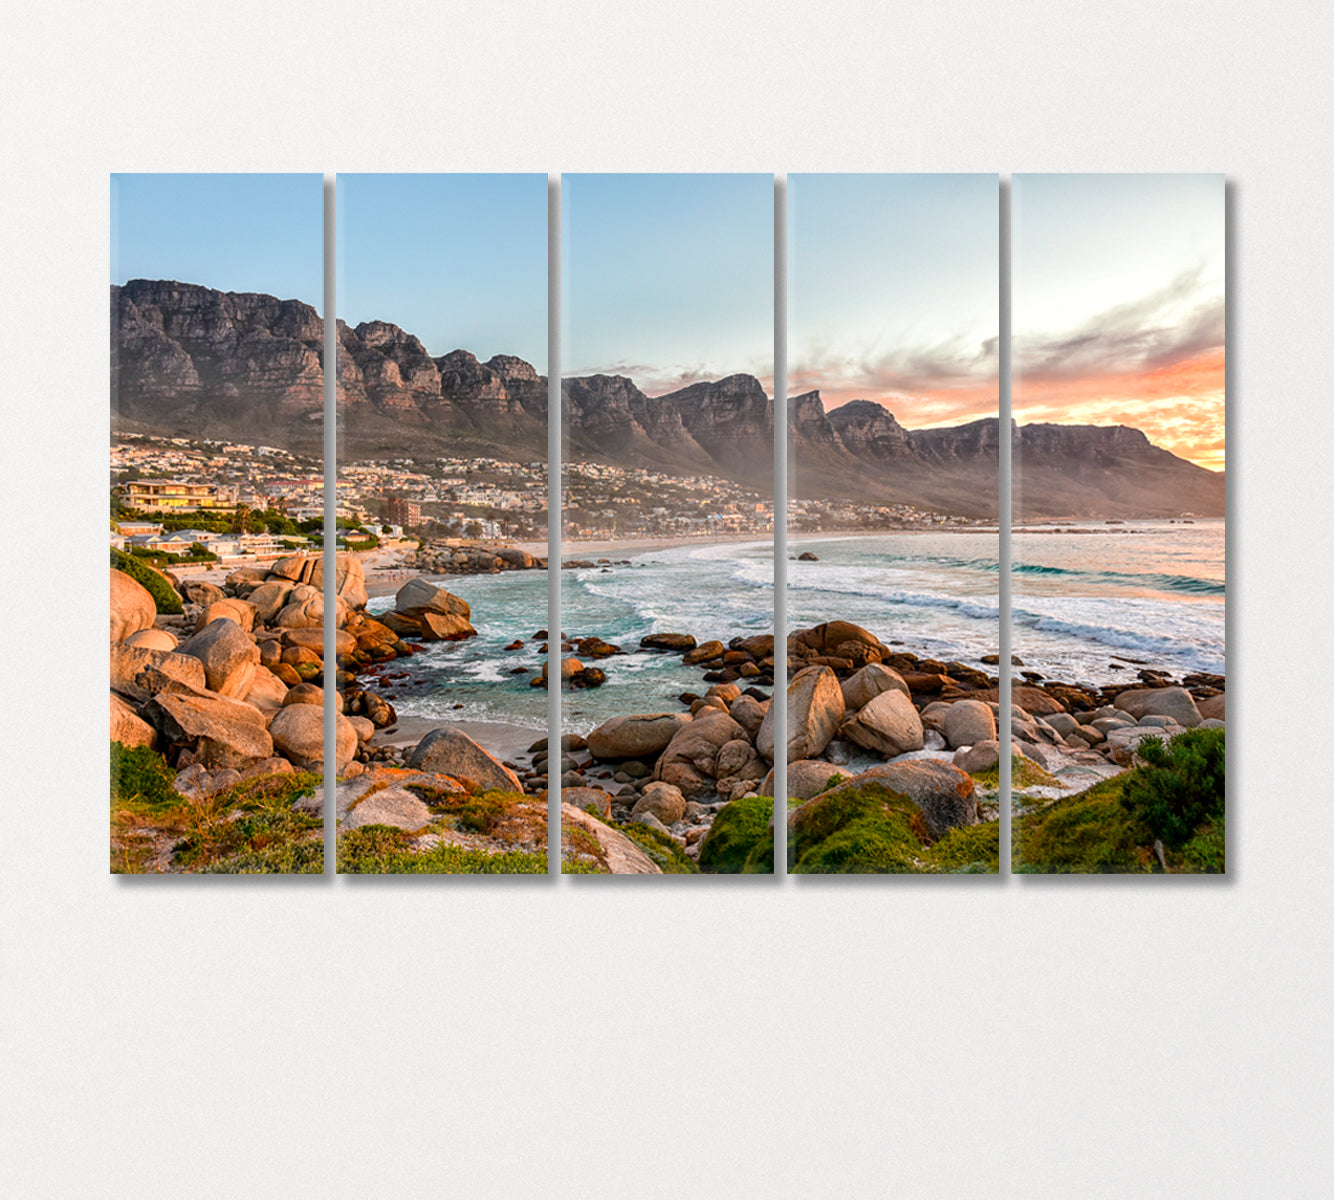 Camps Bay Beach South Africa Canvas Print-Canvas Print-CetArt-5 Panels-36x24 inches-CetArt